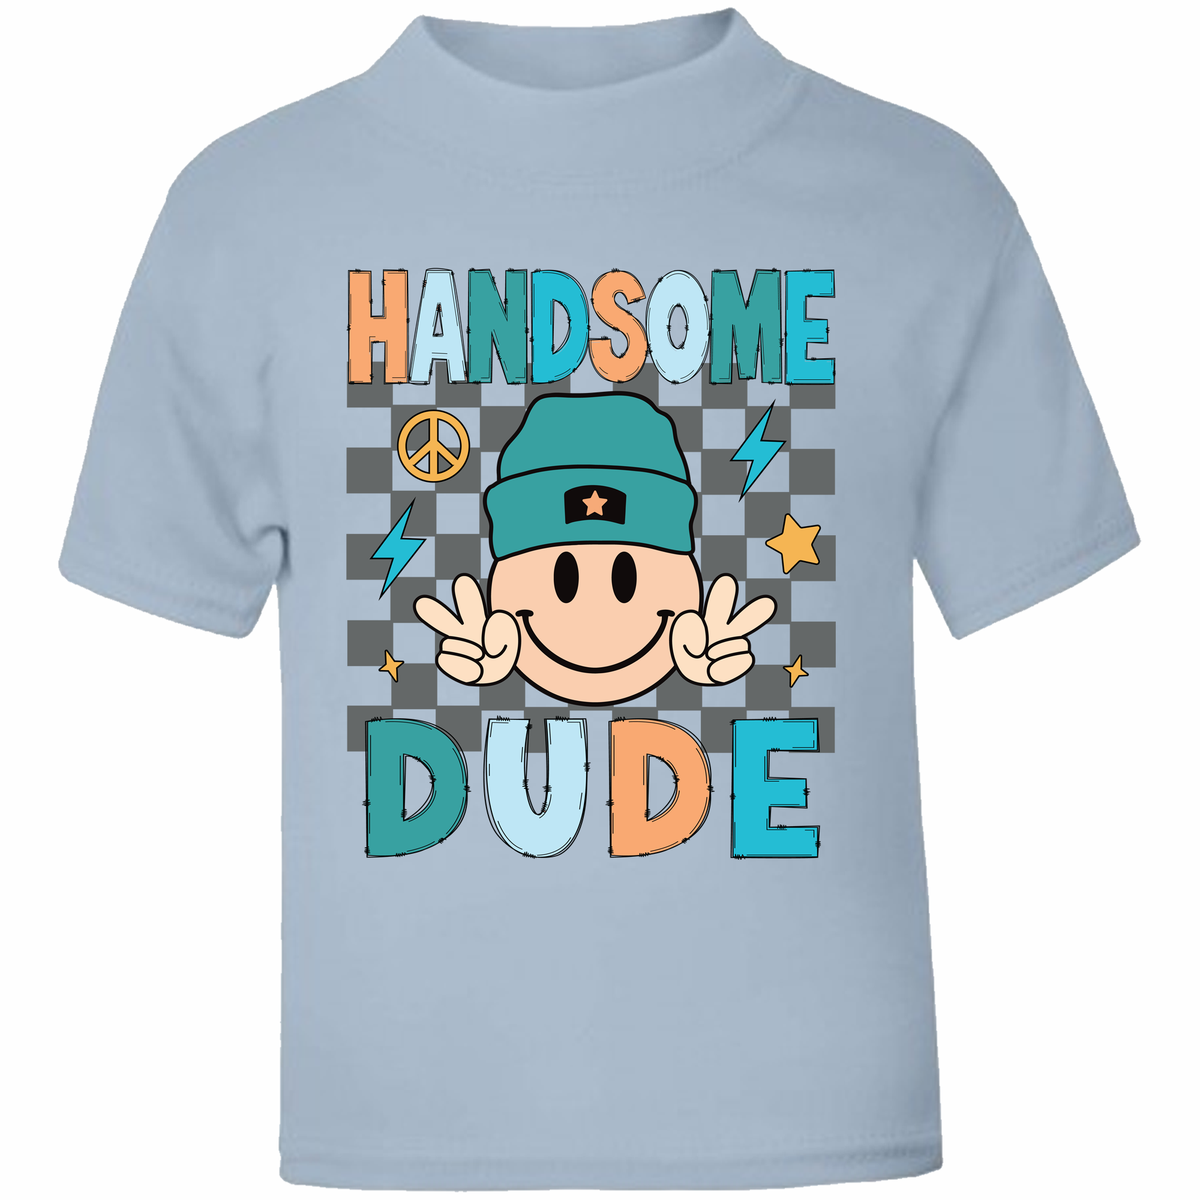 Handsome Dude - t-shirt - more colour options